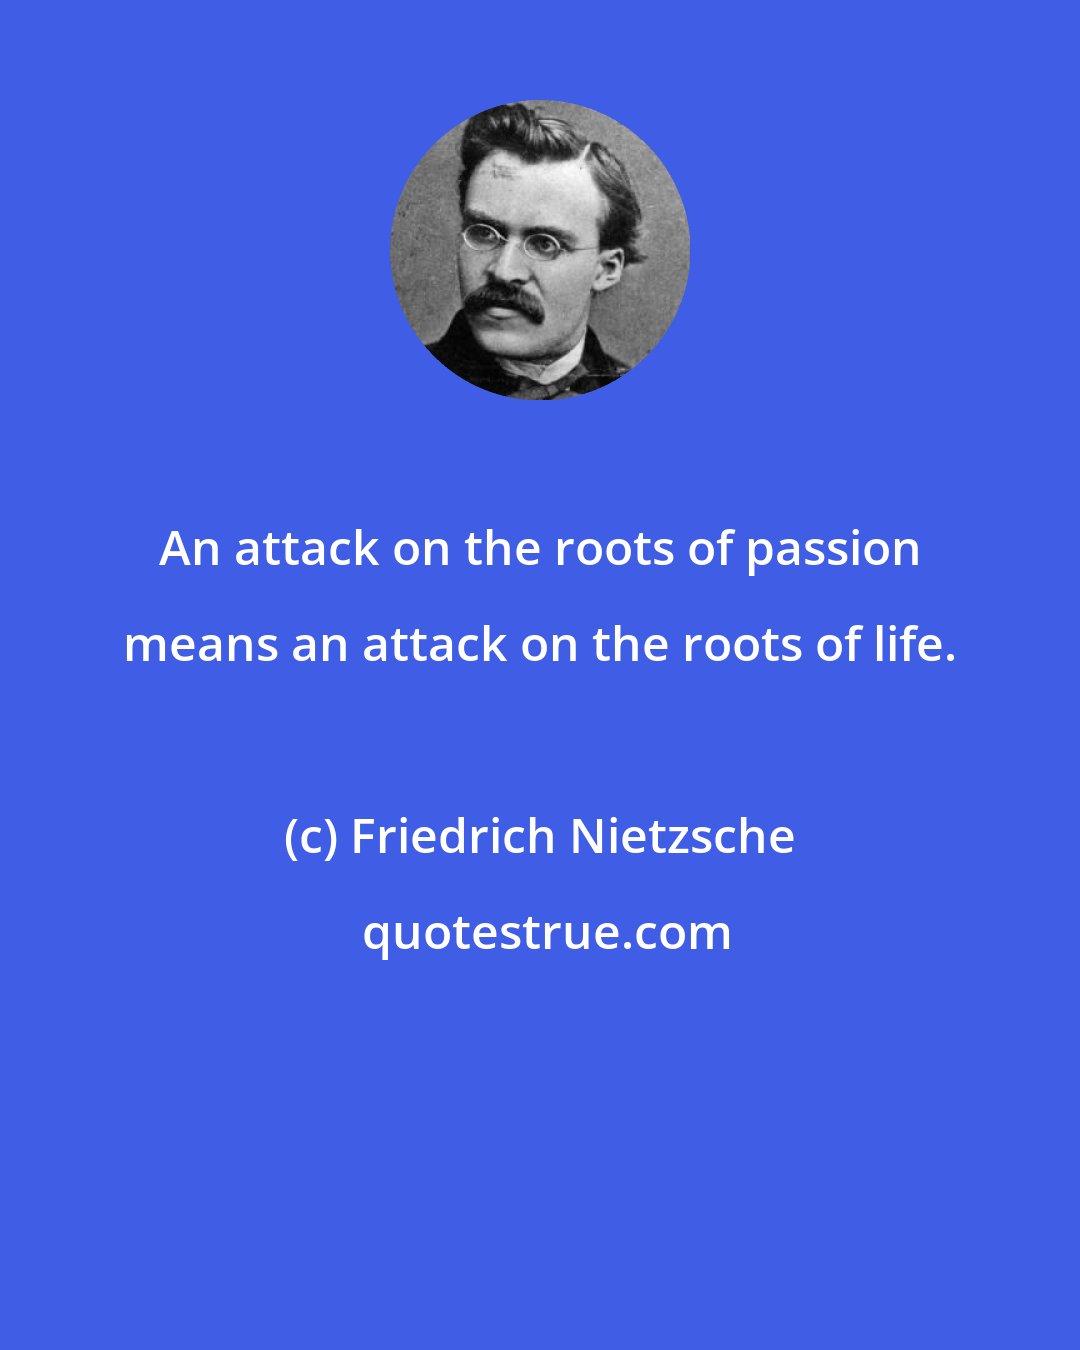 Friedrich Nietzsche: An attack on the roots of passion means an attack on the roots of life.